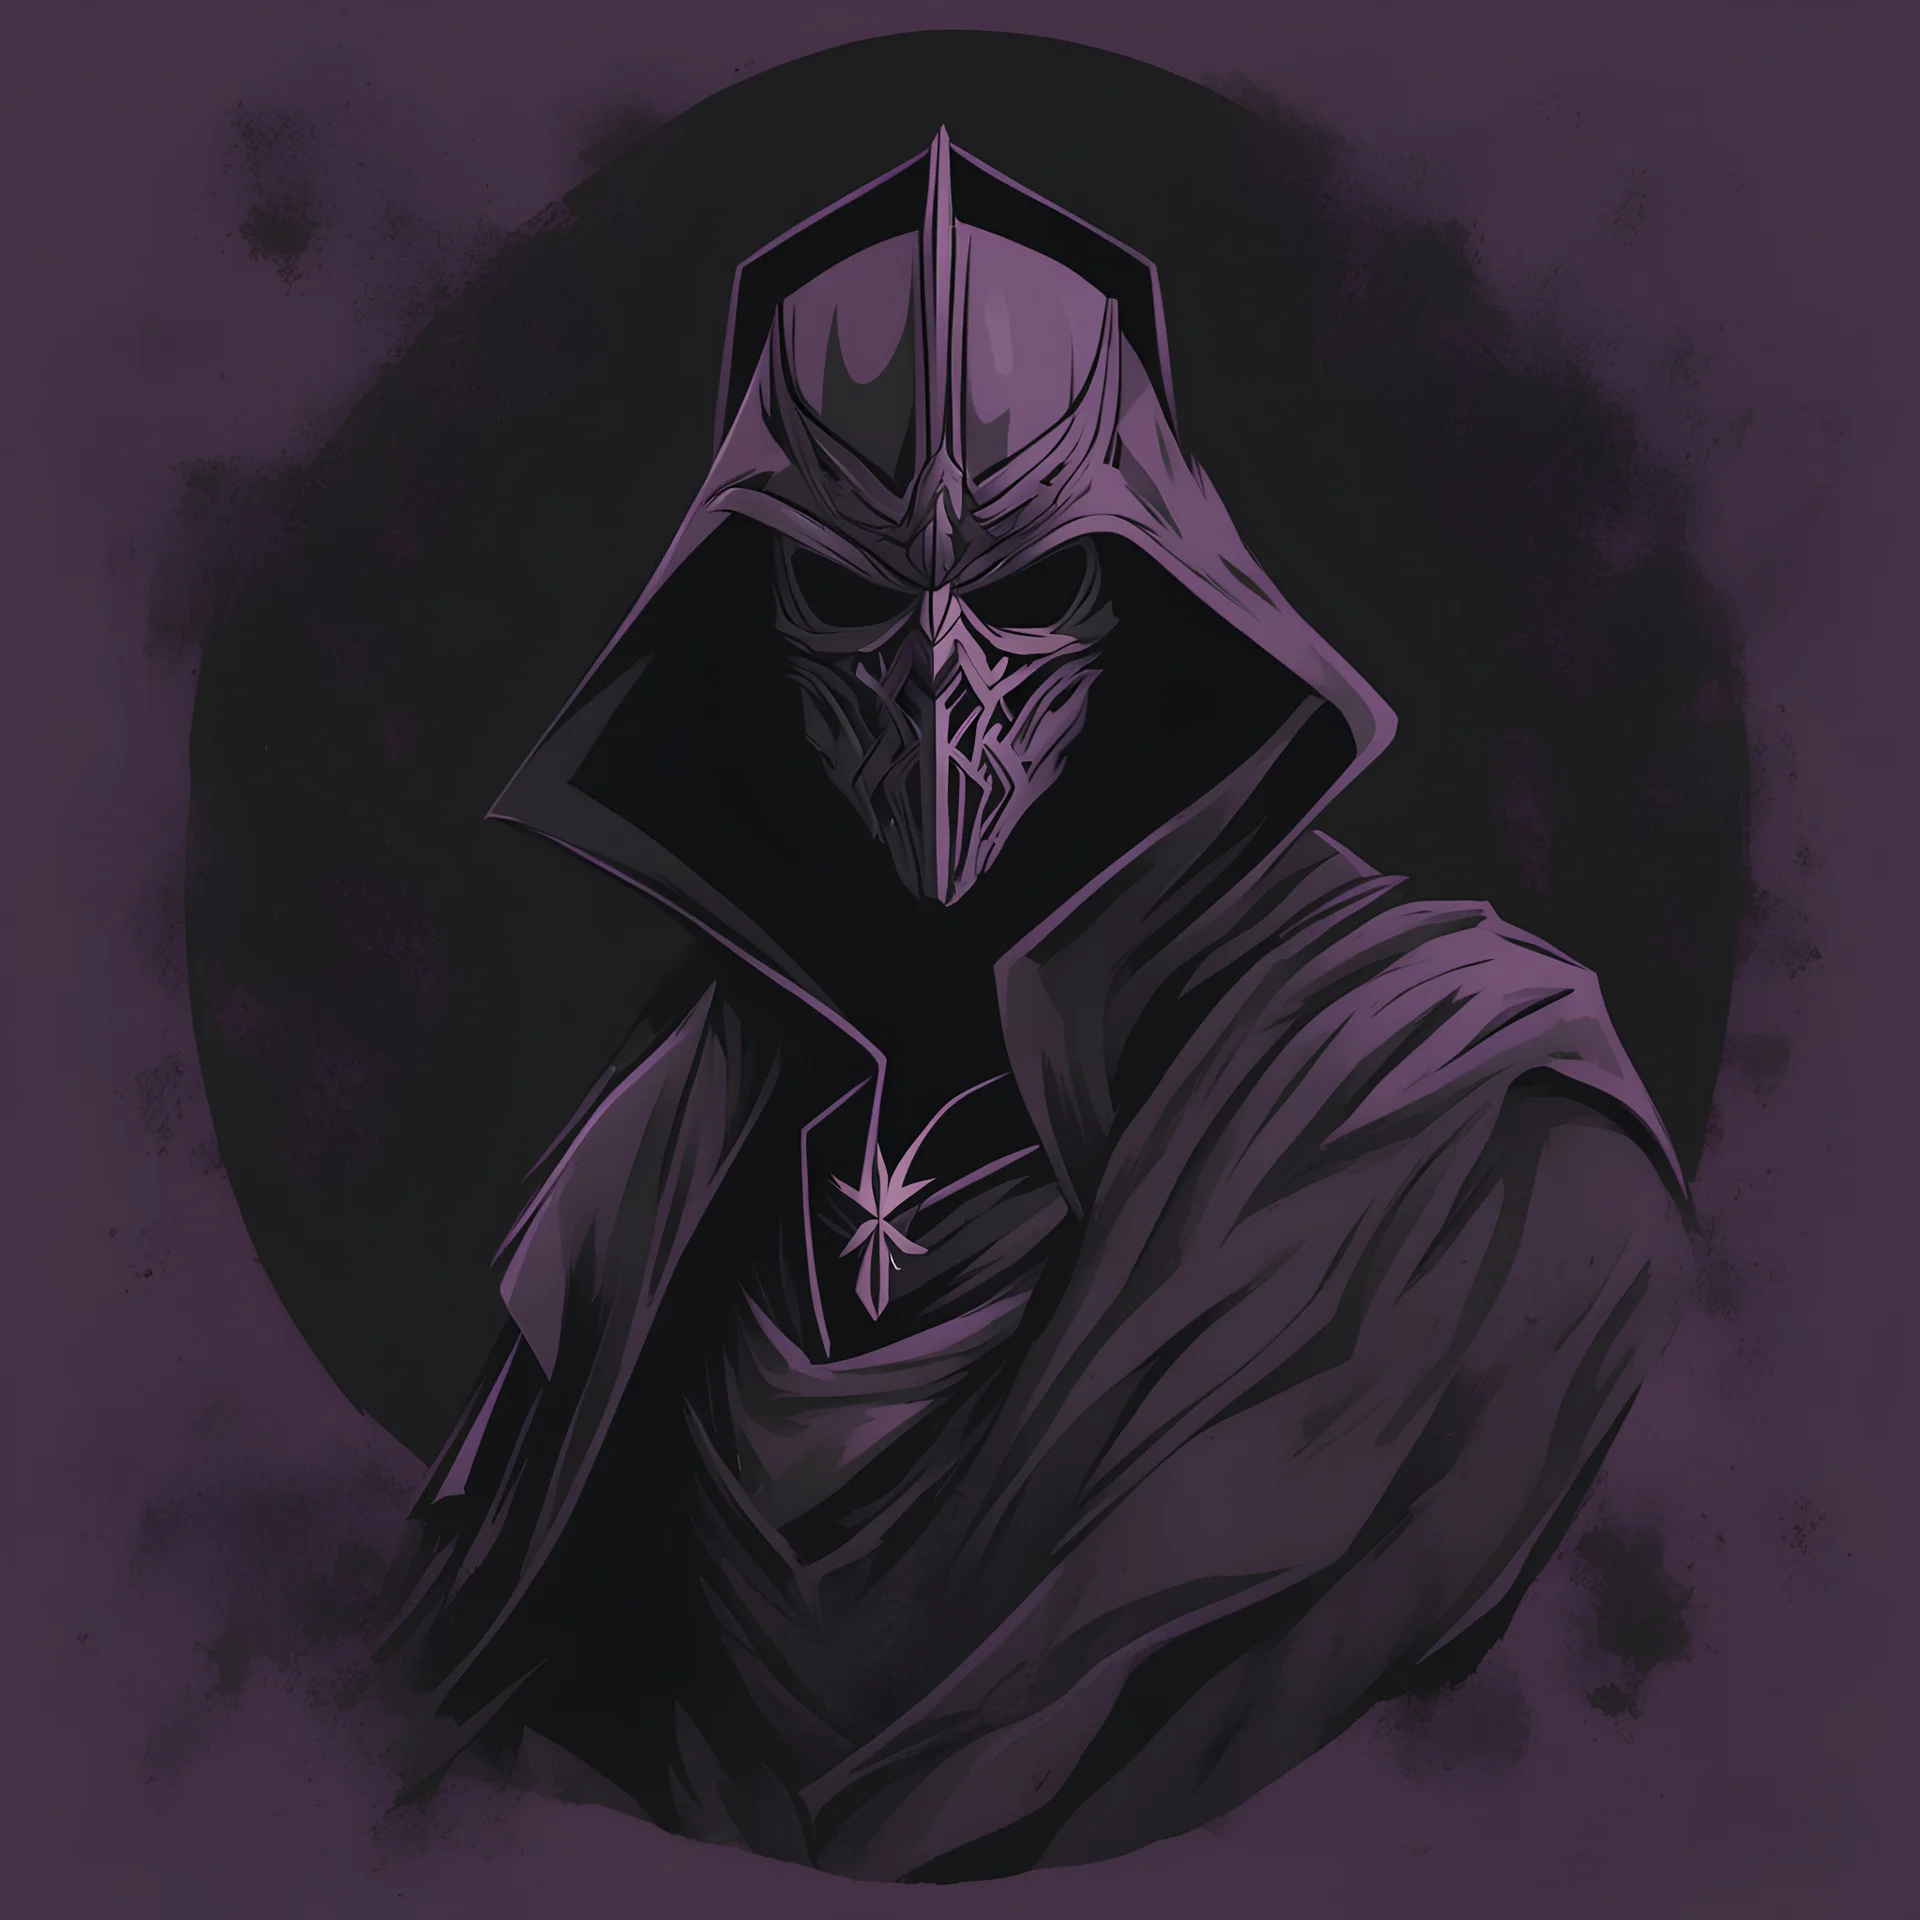 warlock, black mask with ash purple patterns, black robe with ash purple patterns, dark, ominous, ash purple, grey background, profile picture, simplistic design